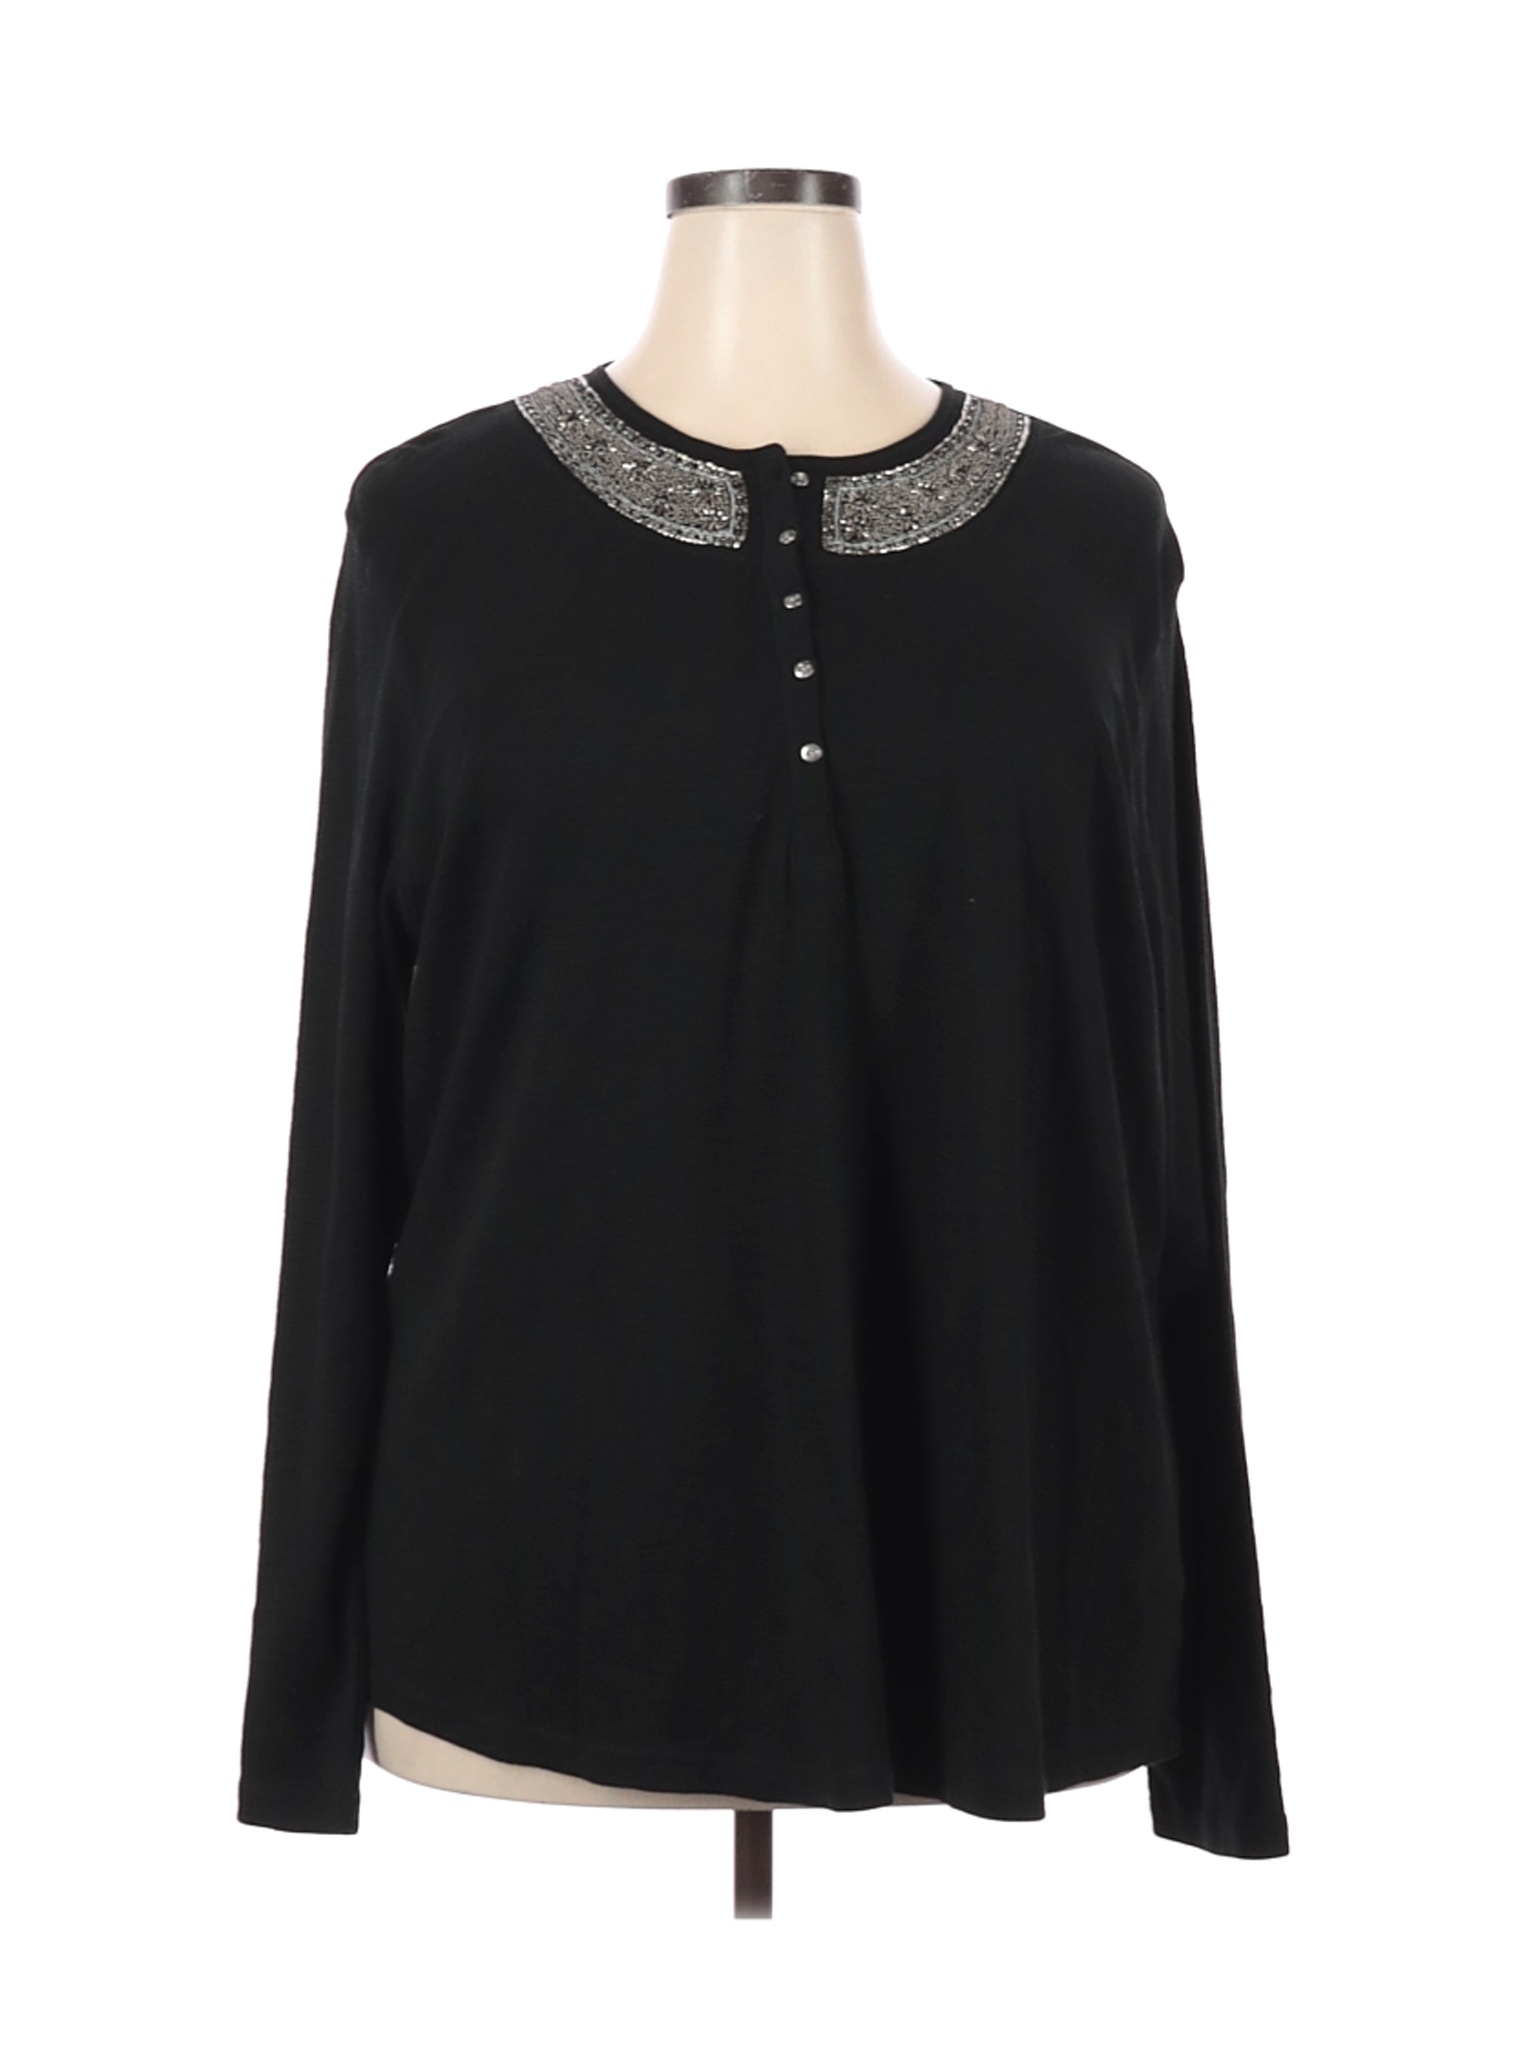 Chaps Women Black Long Sleeve Top 3X Plus | eBay